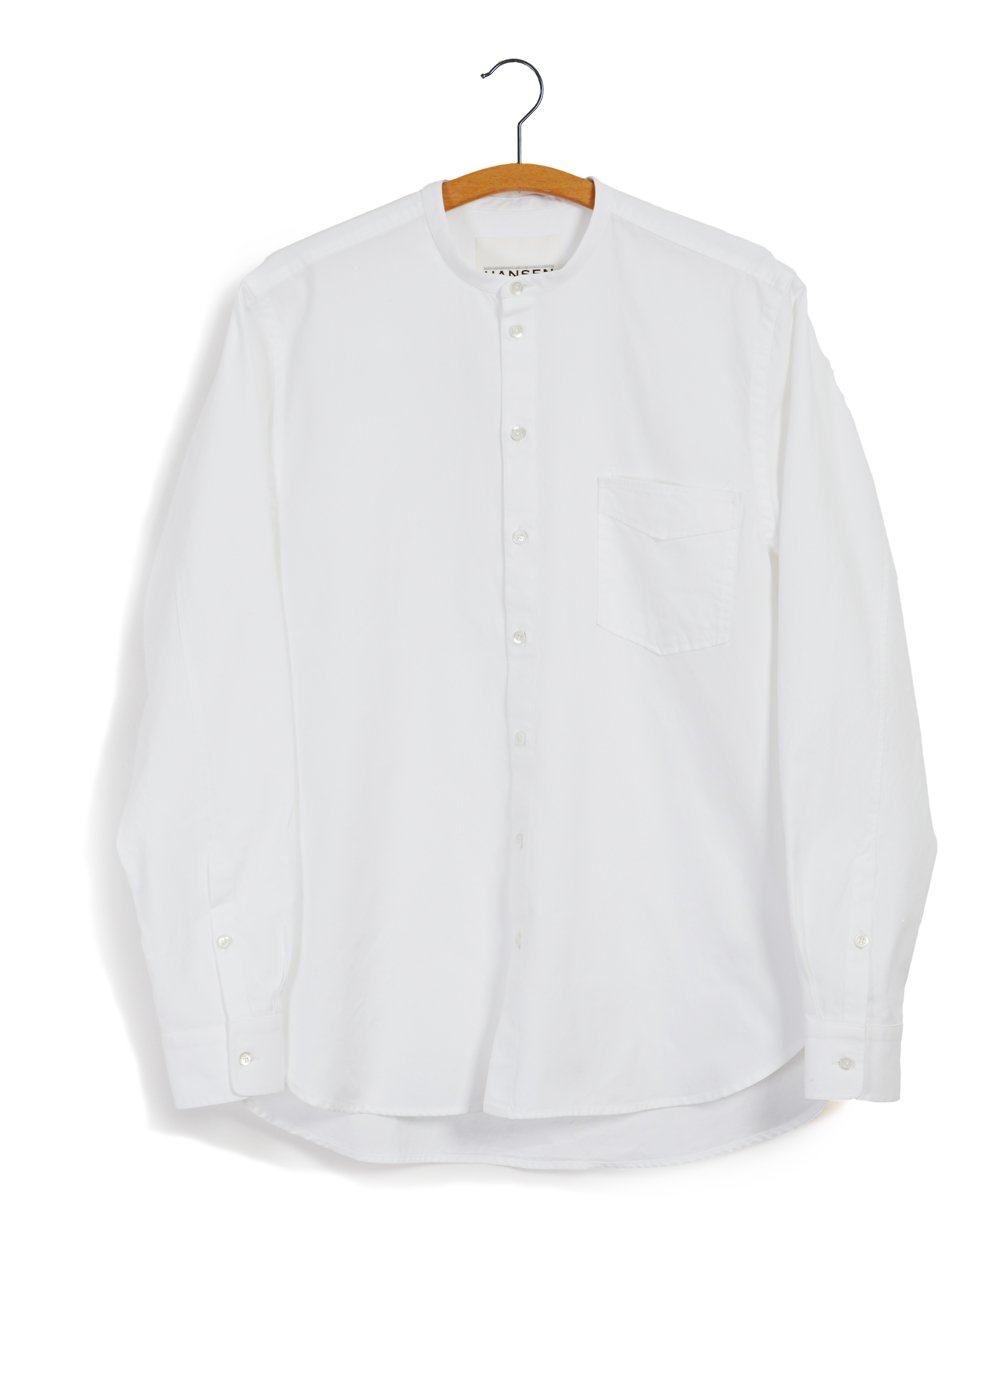 Hansen Garments ANTE | Casual Classic Shirt | white, beige